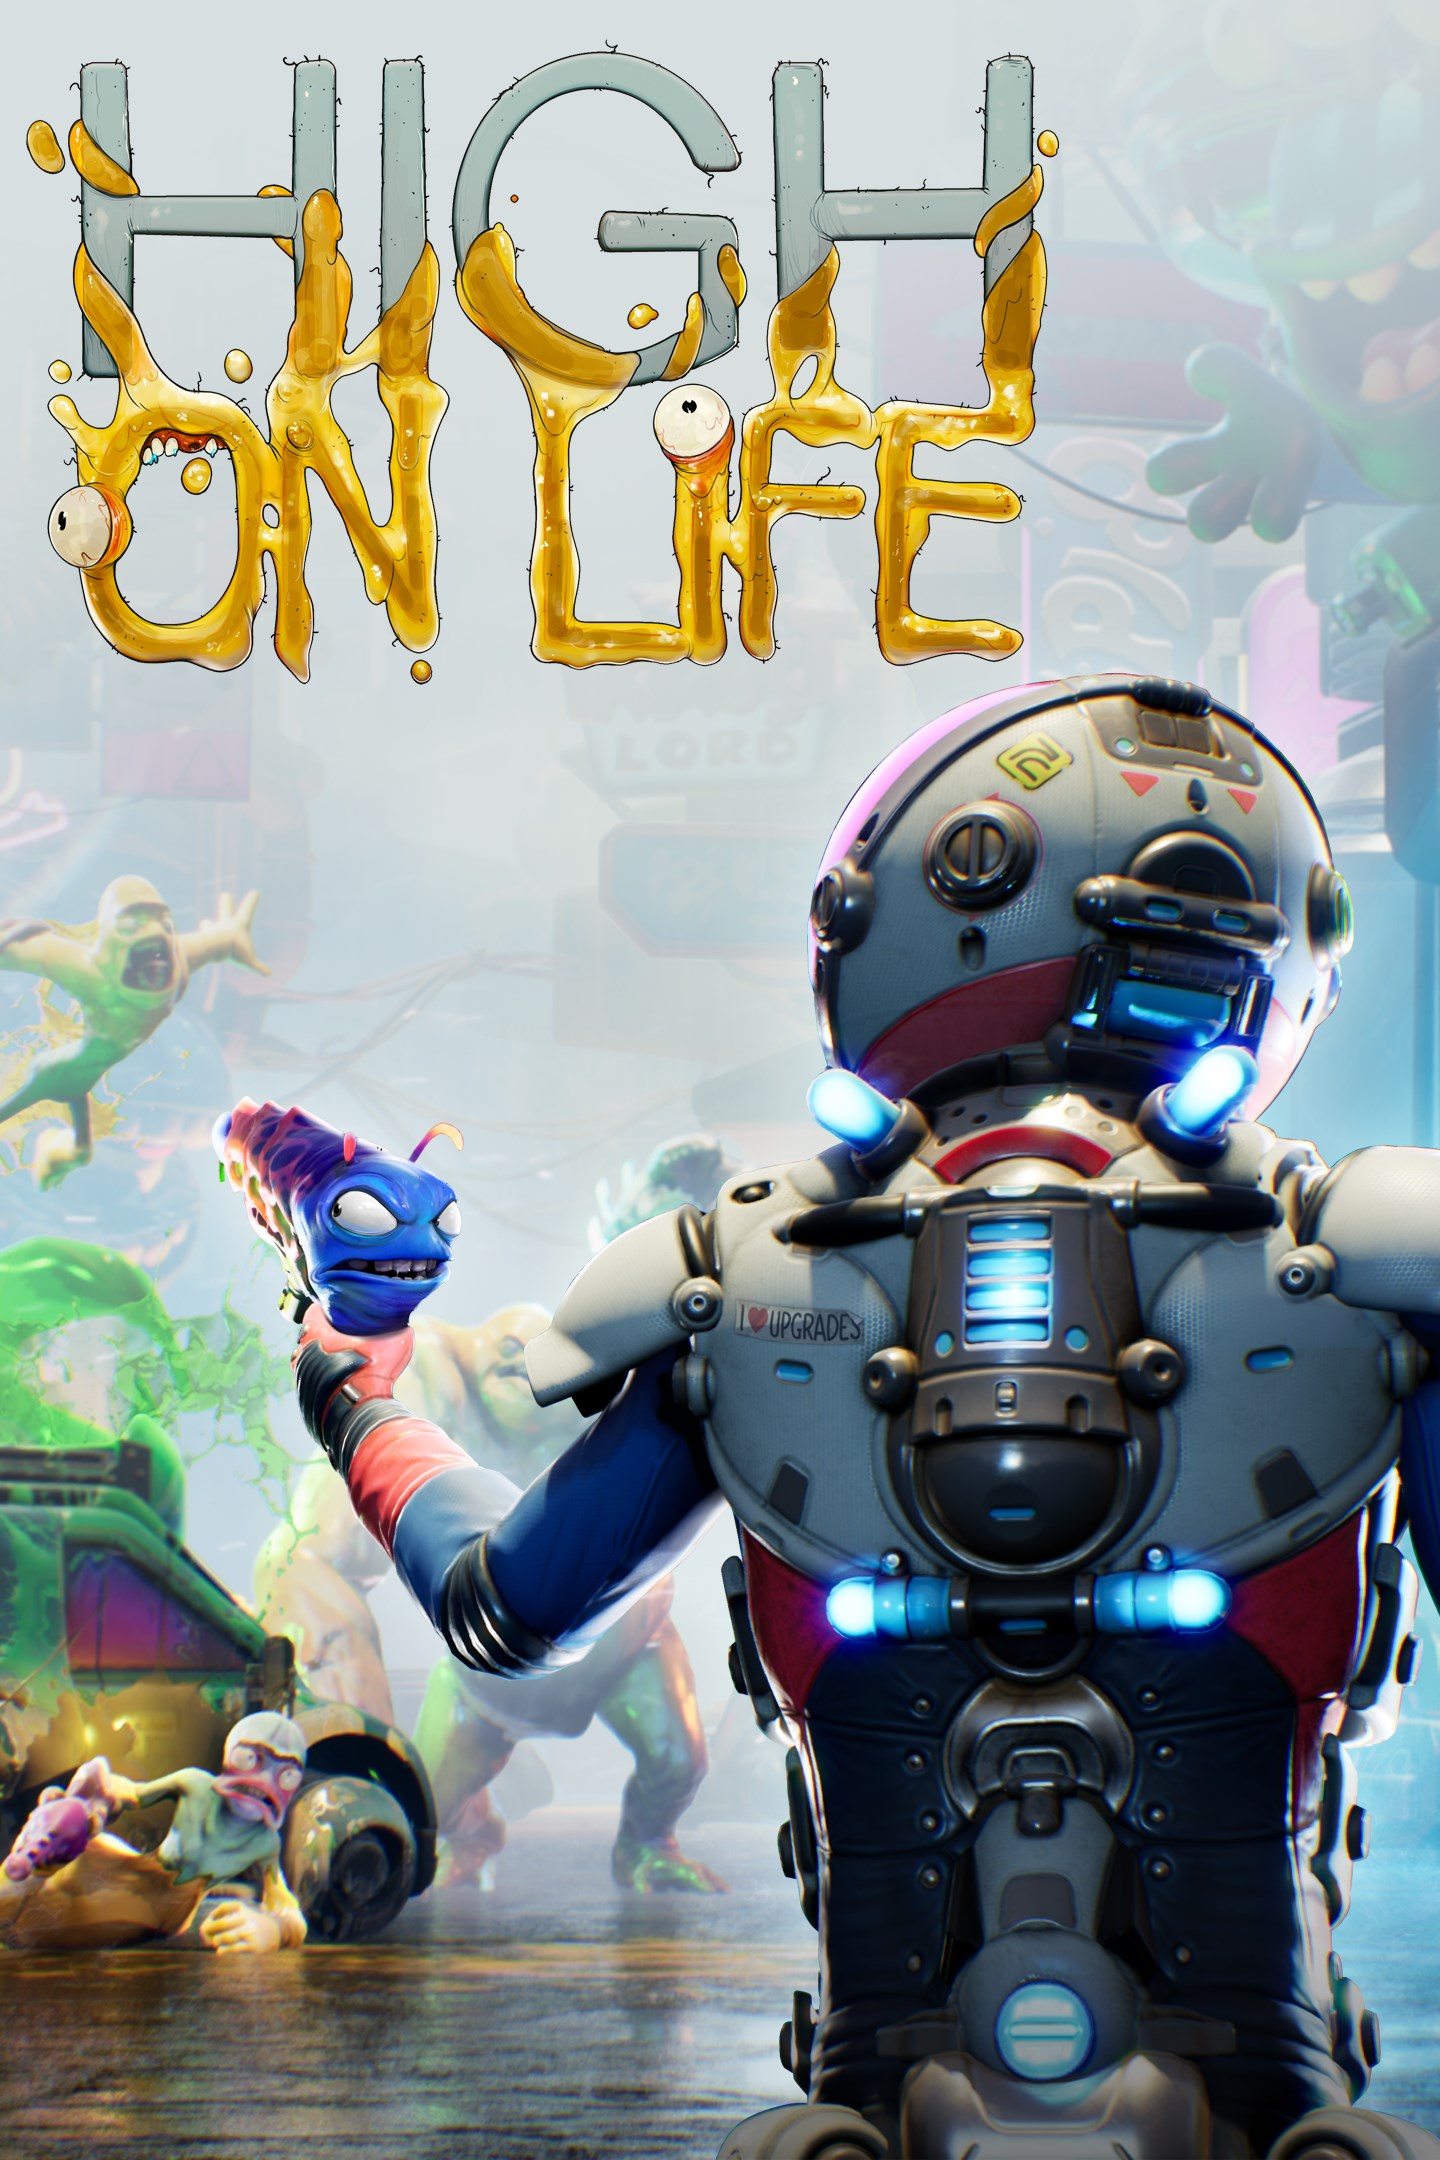 High On Life: DLC Bundle on XOne — price history, screenshots, discounts •  USA